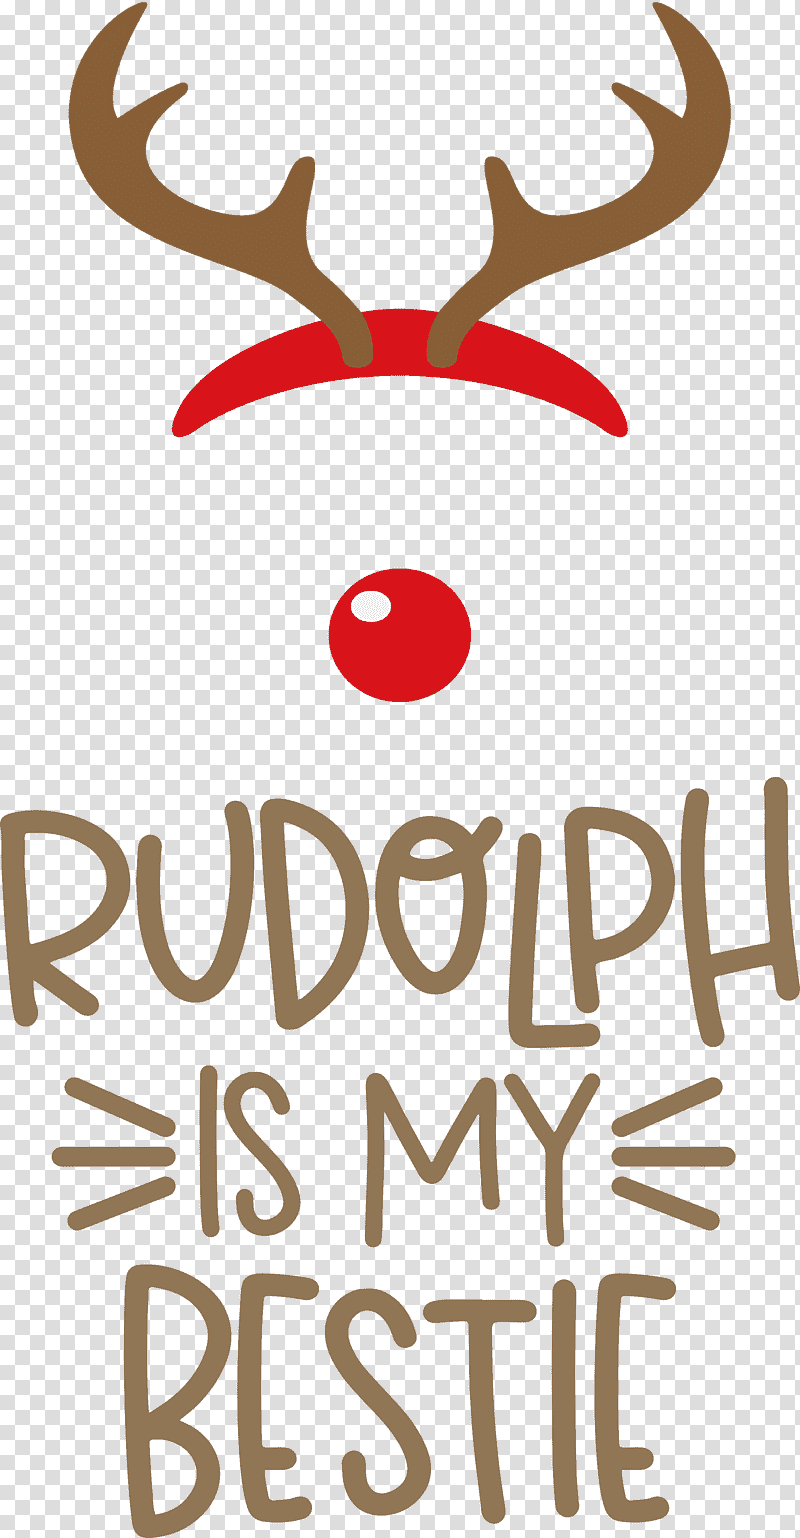 Rudolph is my bestie Rudolph Deer, Christmas , Reindeer, Logo, Antler, Meter, Line transparent background PNG clipart